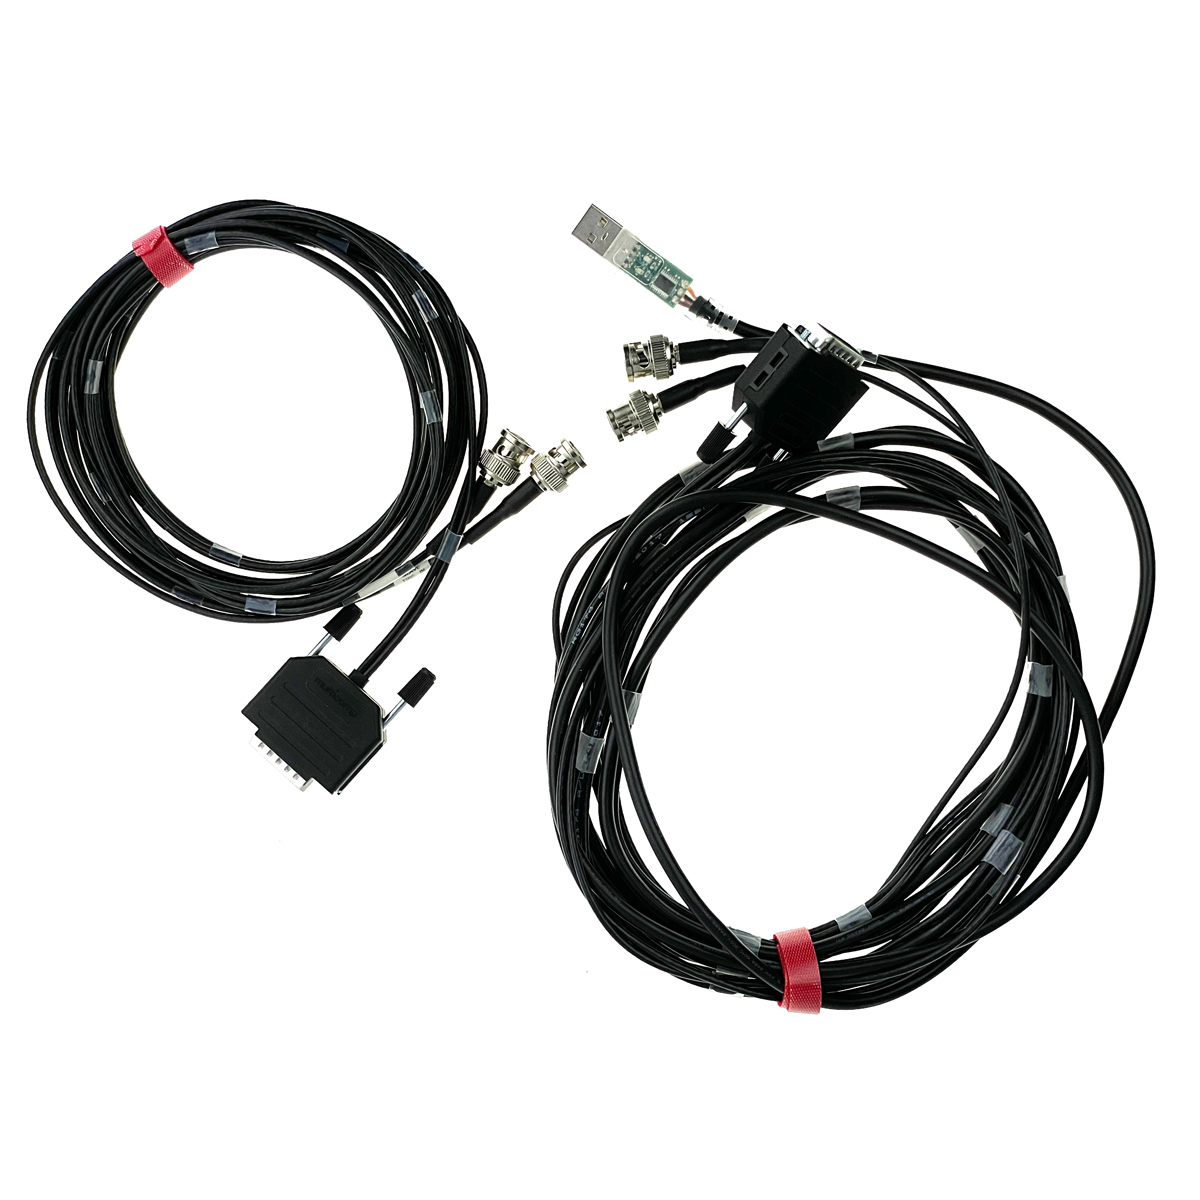 QTMS Control and Trigger Cables